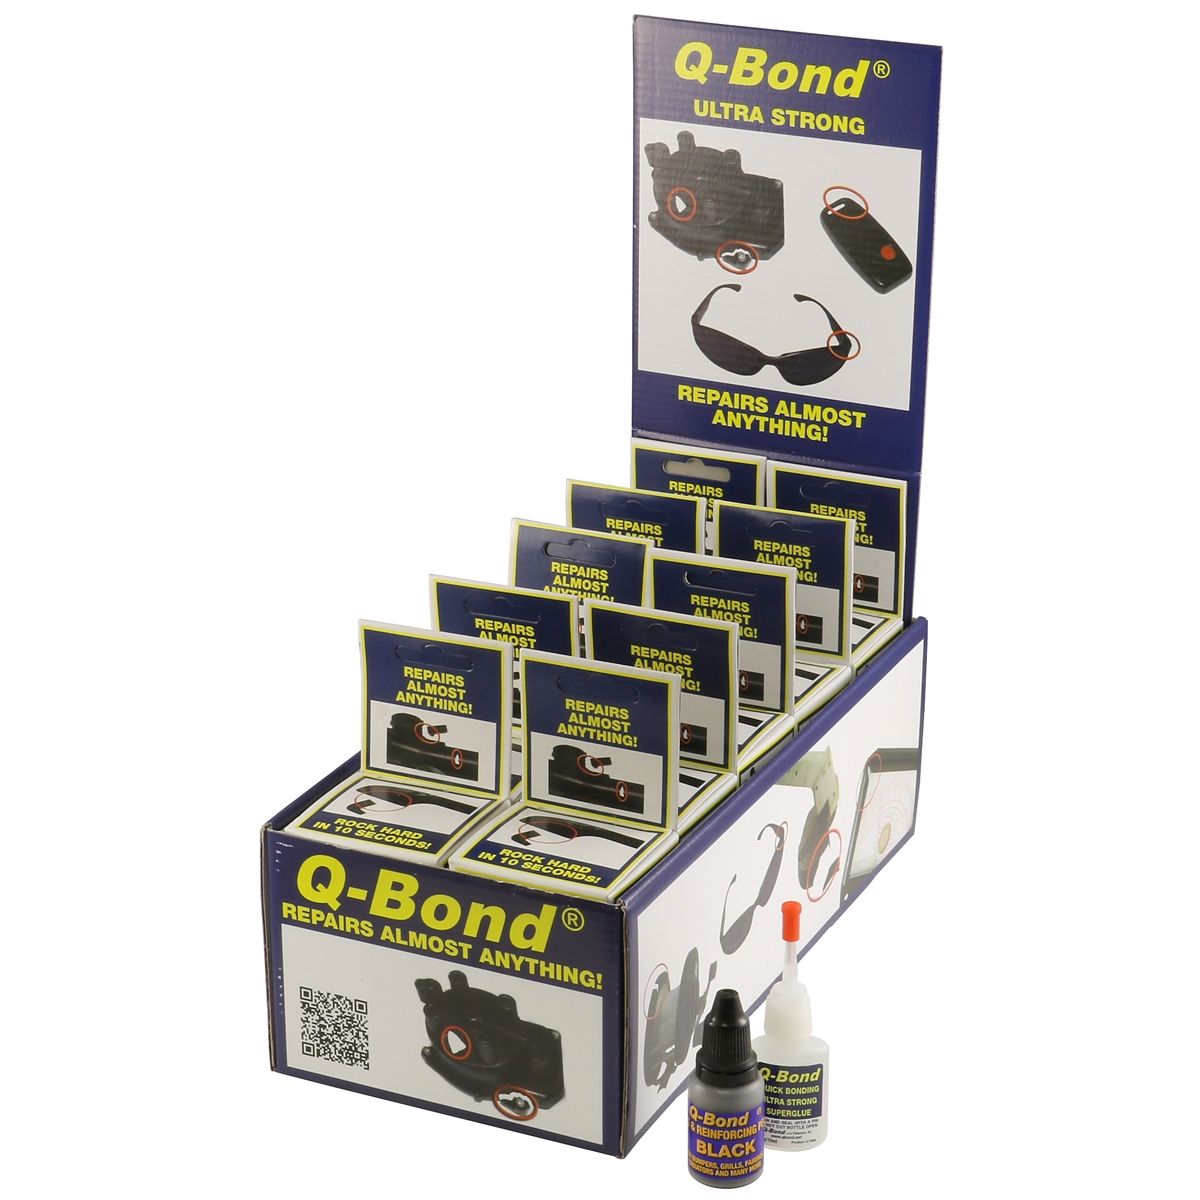 Q-Bond Adhesive Kit - 10 pack Display